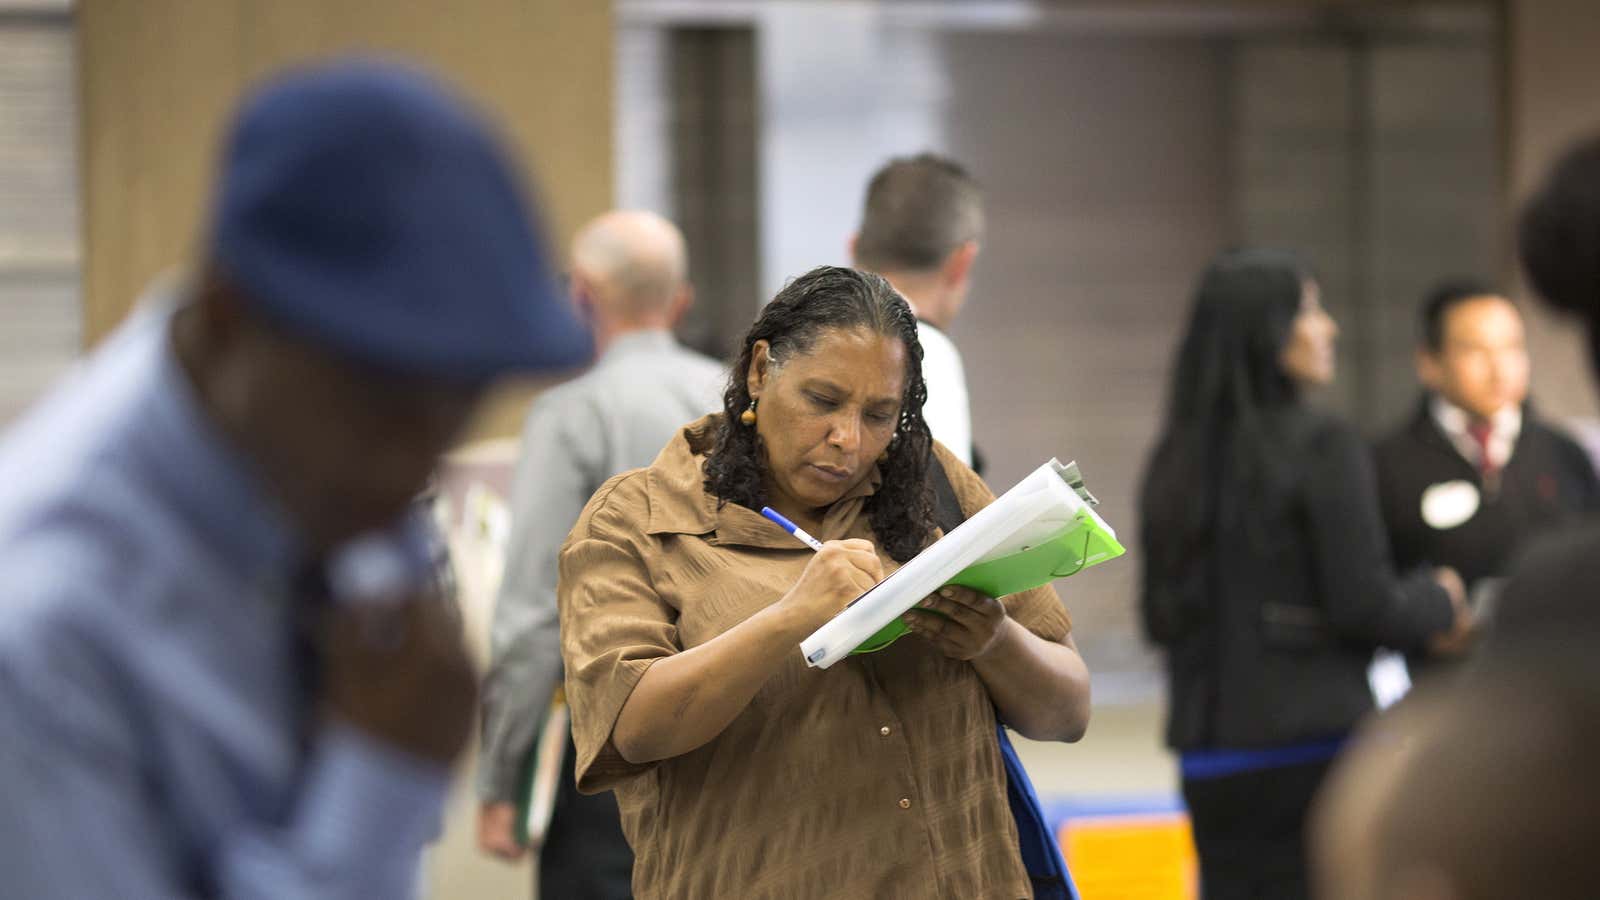 Malana Long fills out a job application during a job fair in Los Angeles.